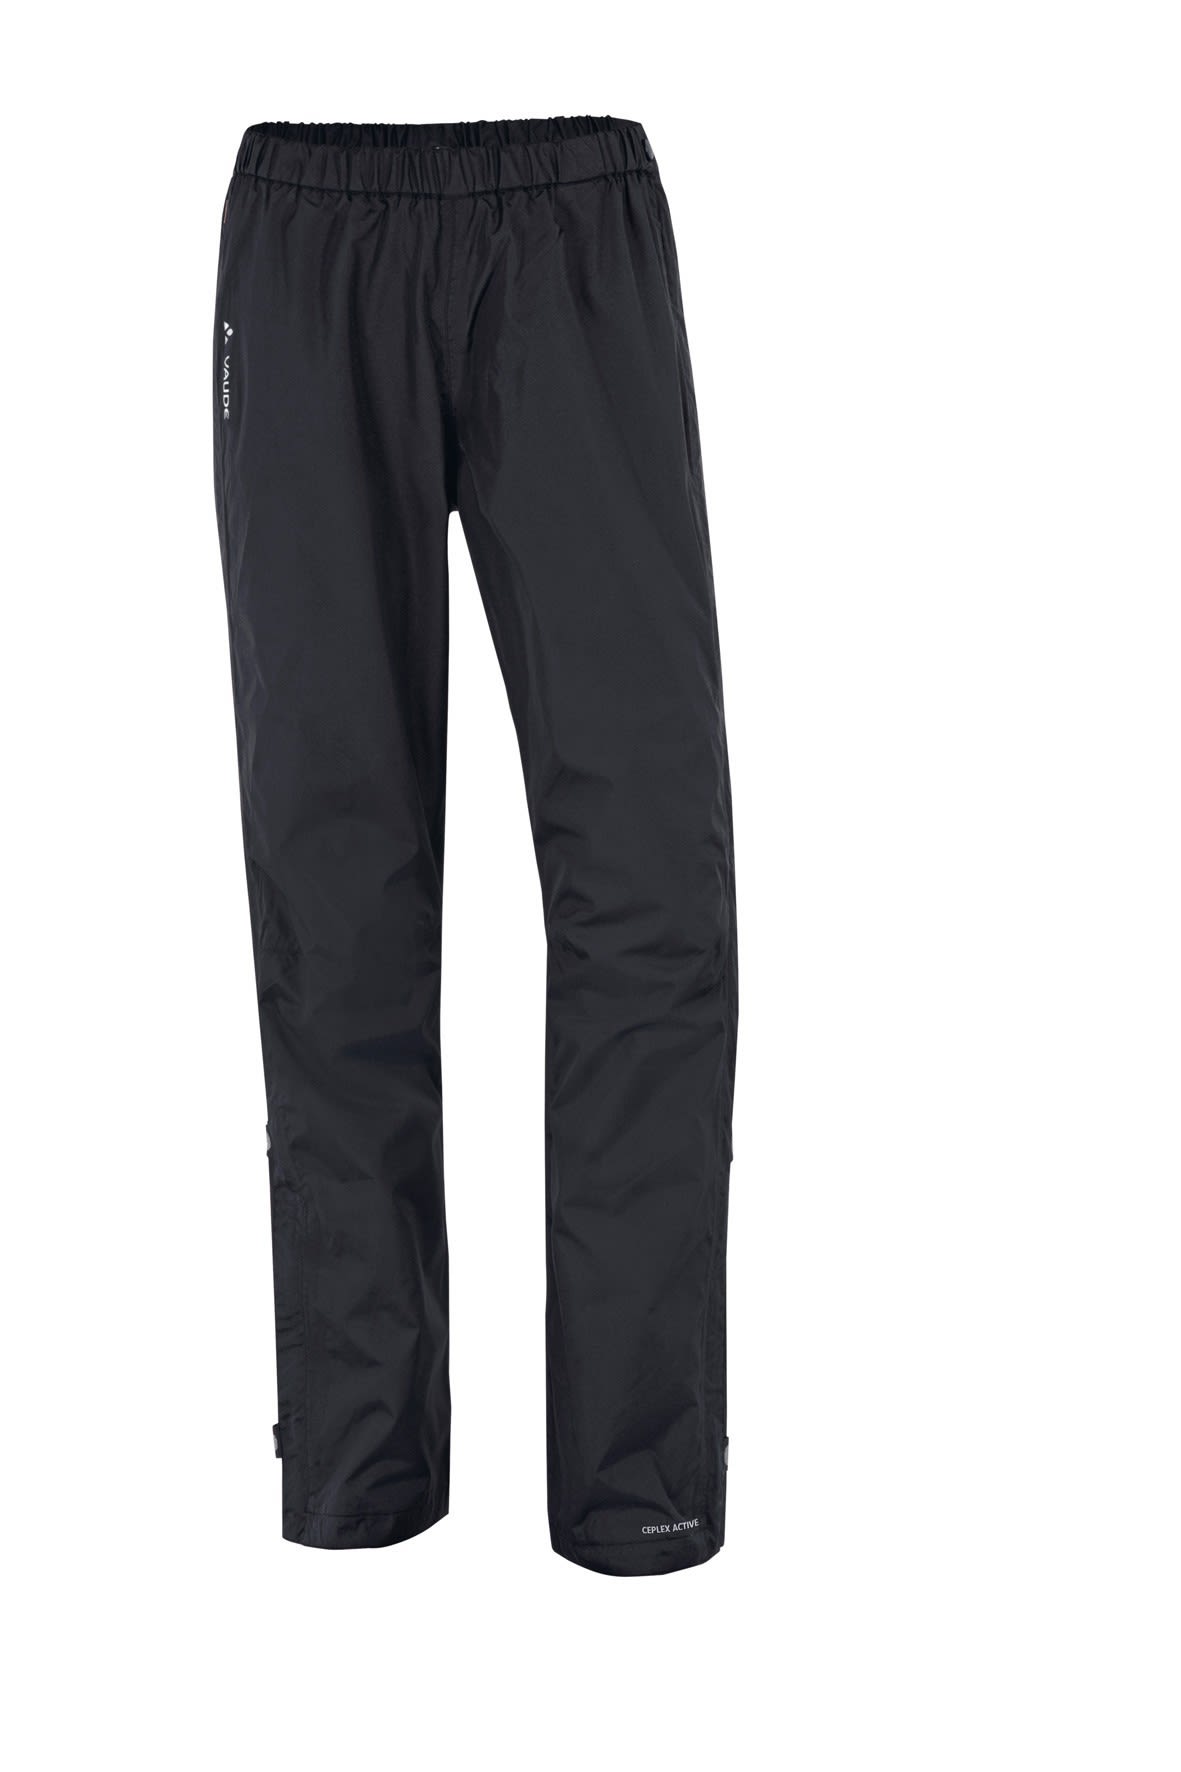 Vaude Fluid Full-Zip Pants Schwarz- Female Hosen- Grsse 36 - Short - Farbe Black unter Vaude